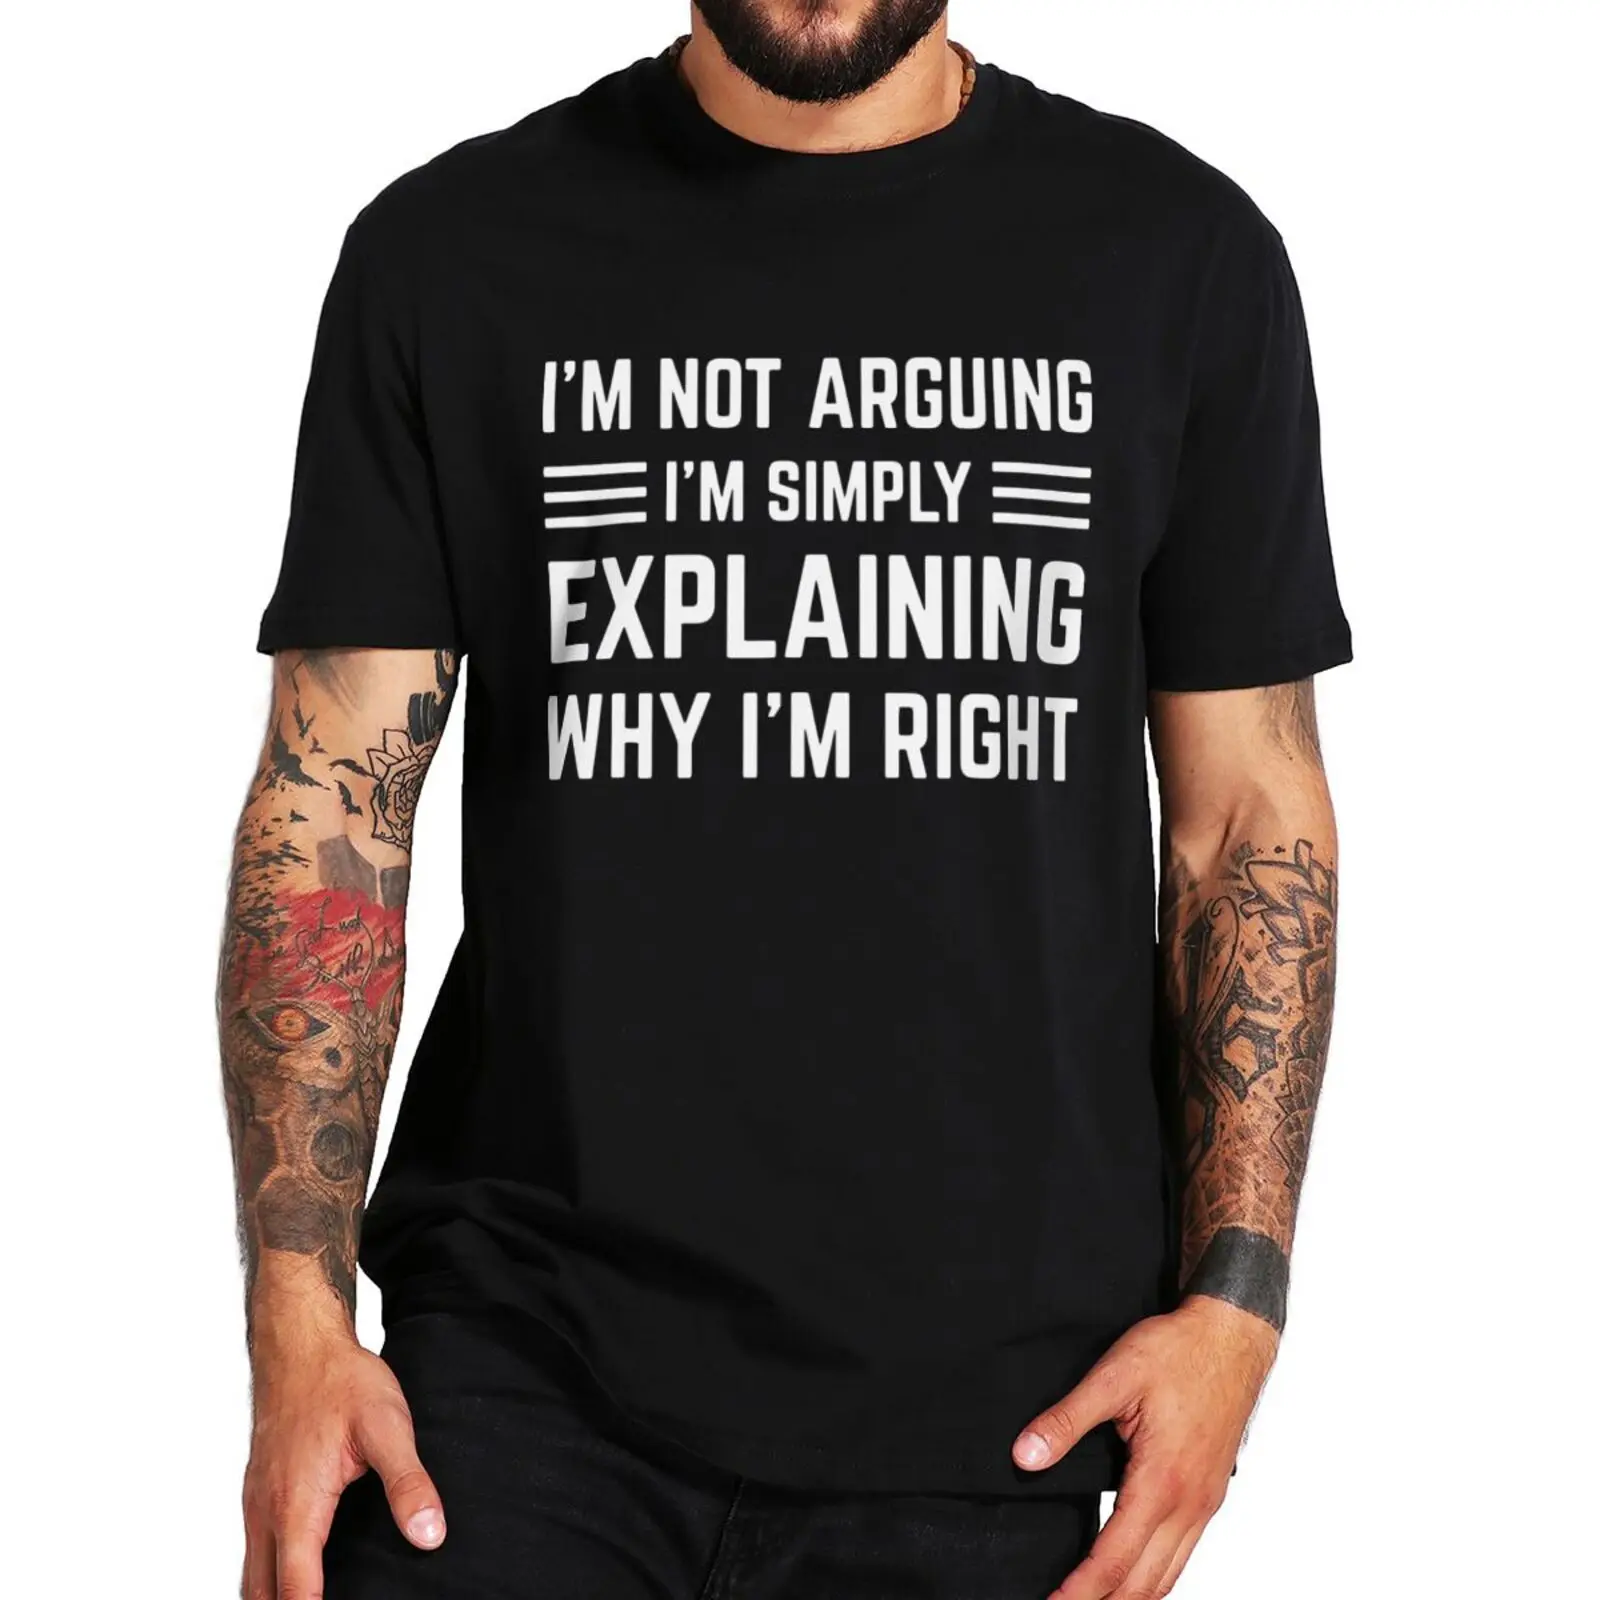 

I Am Not Arguing Im Simply Explaining T Shirt Funny Introvert Joke Humor Gift Tee Tops Summer Cotton Casual Men Women T-shirts